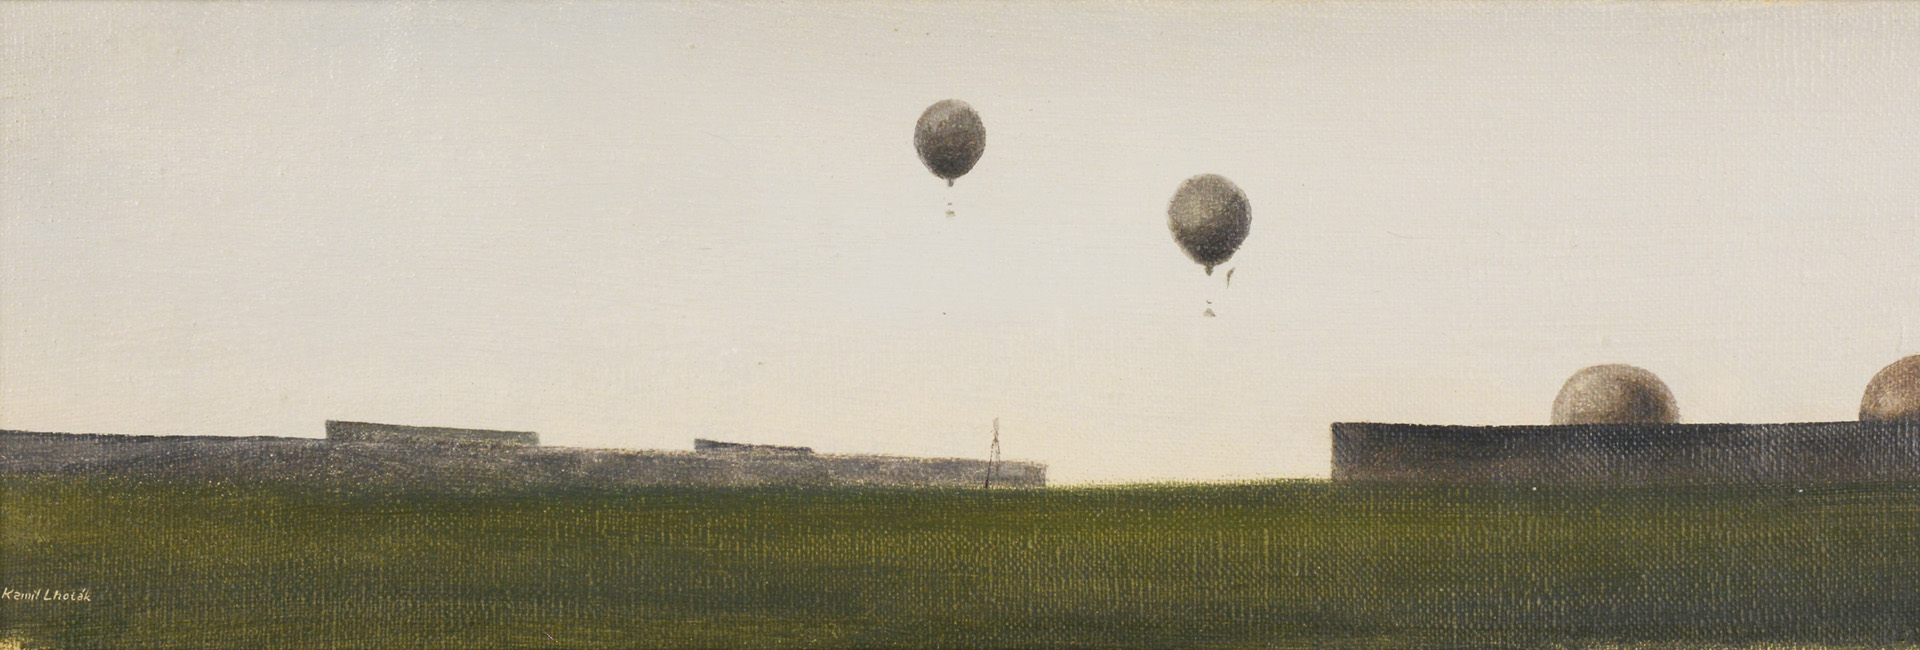 Heißluftballon Rennen, 1942 | Verkauft für 1.620.000 CZK | Lot. nr. 182 [Kamil Lhoták (1912 - 1990)]